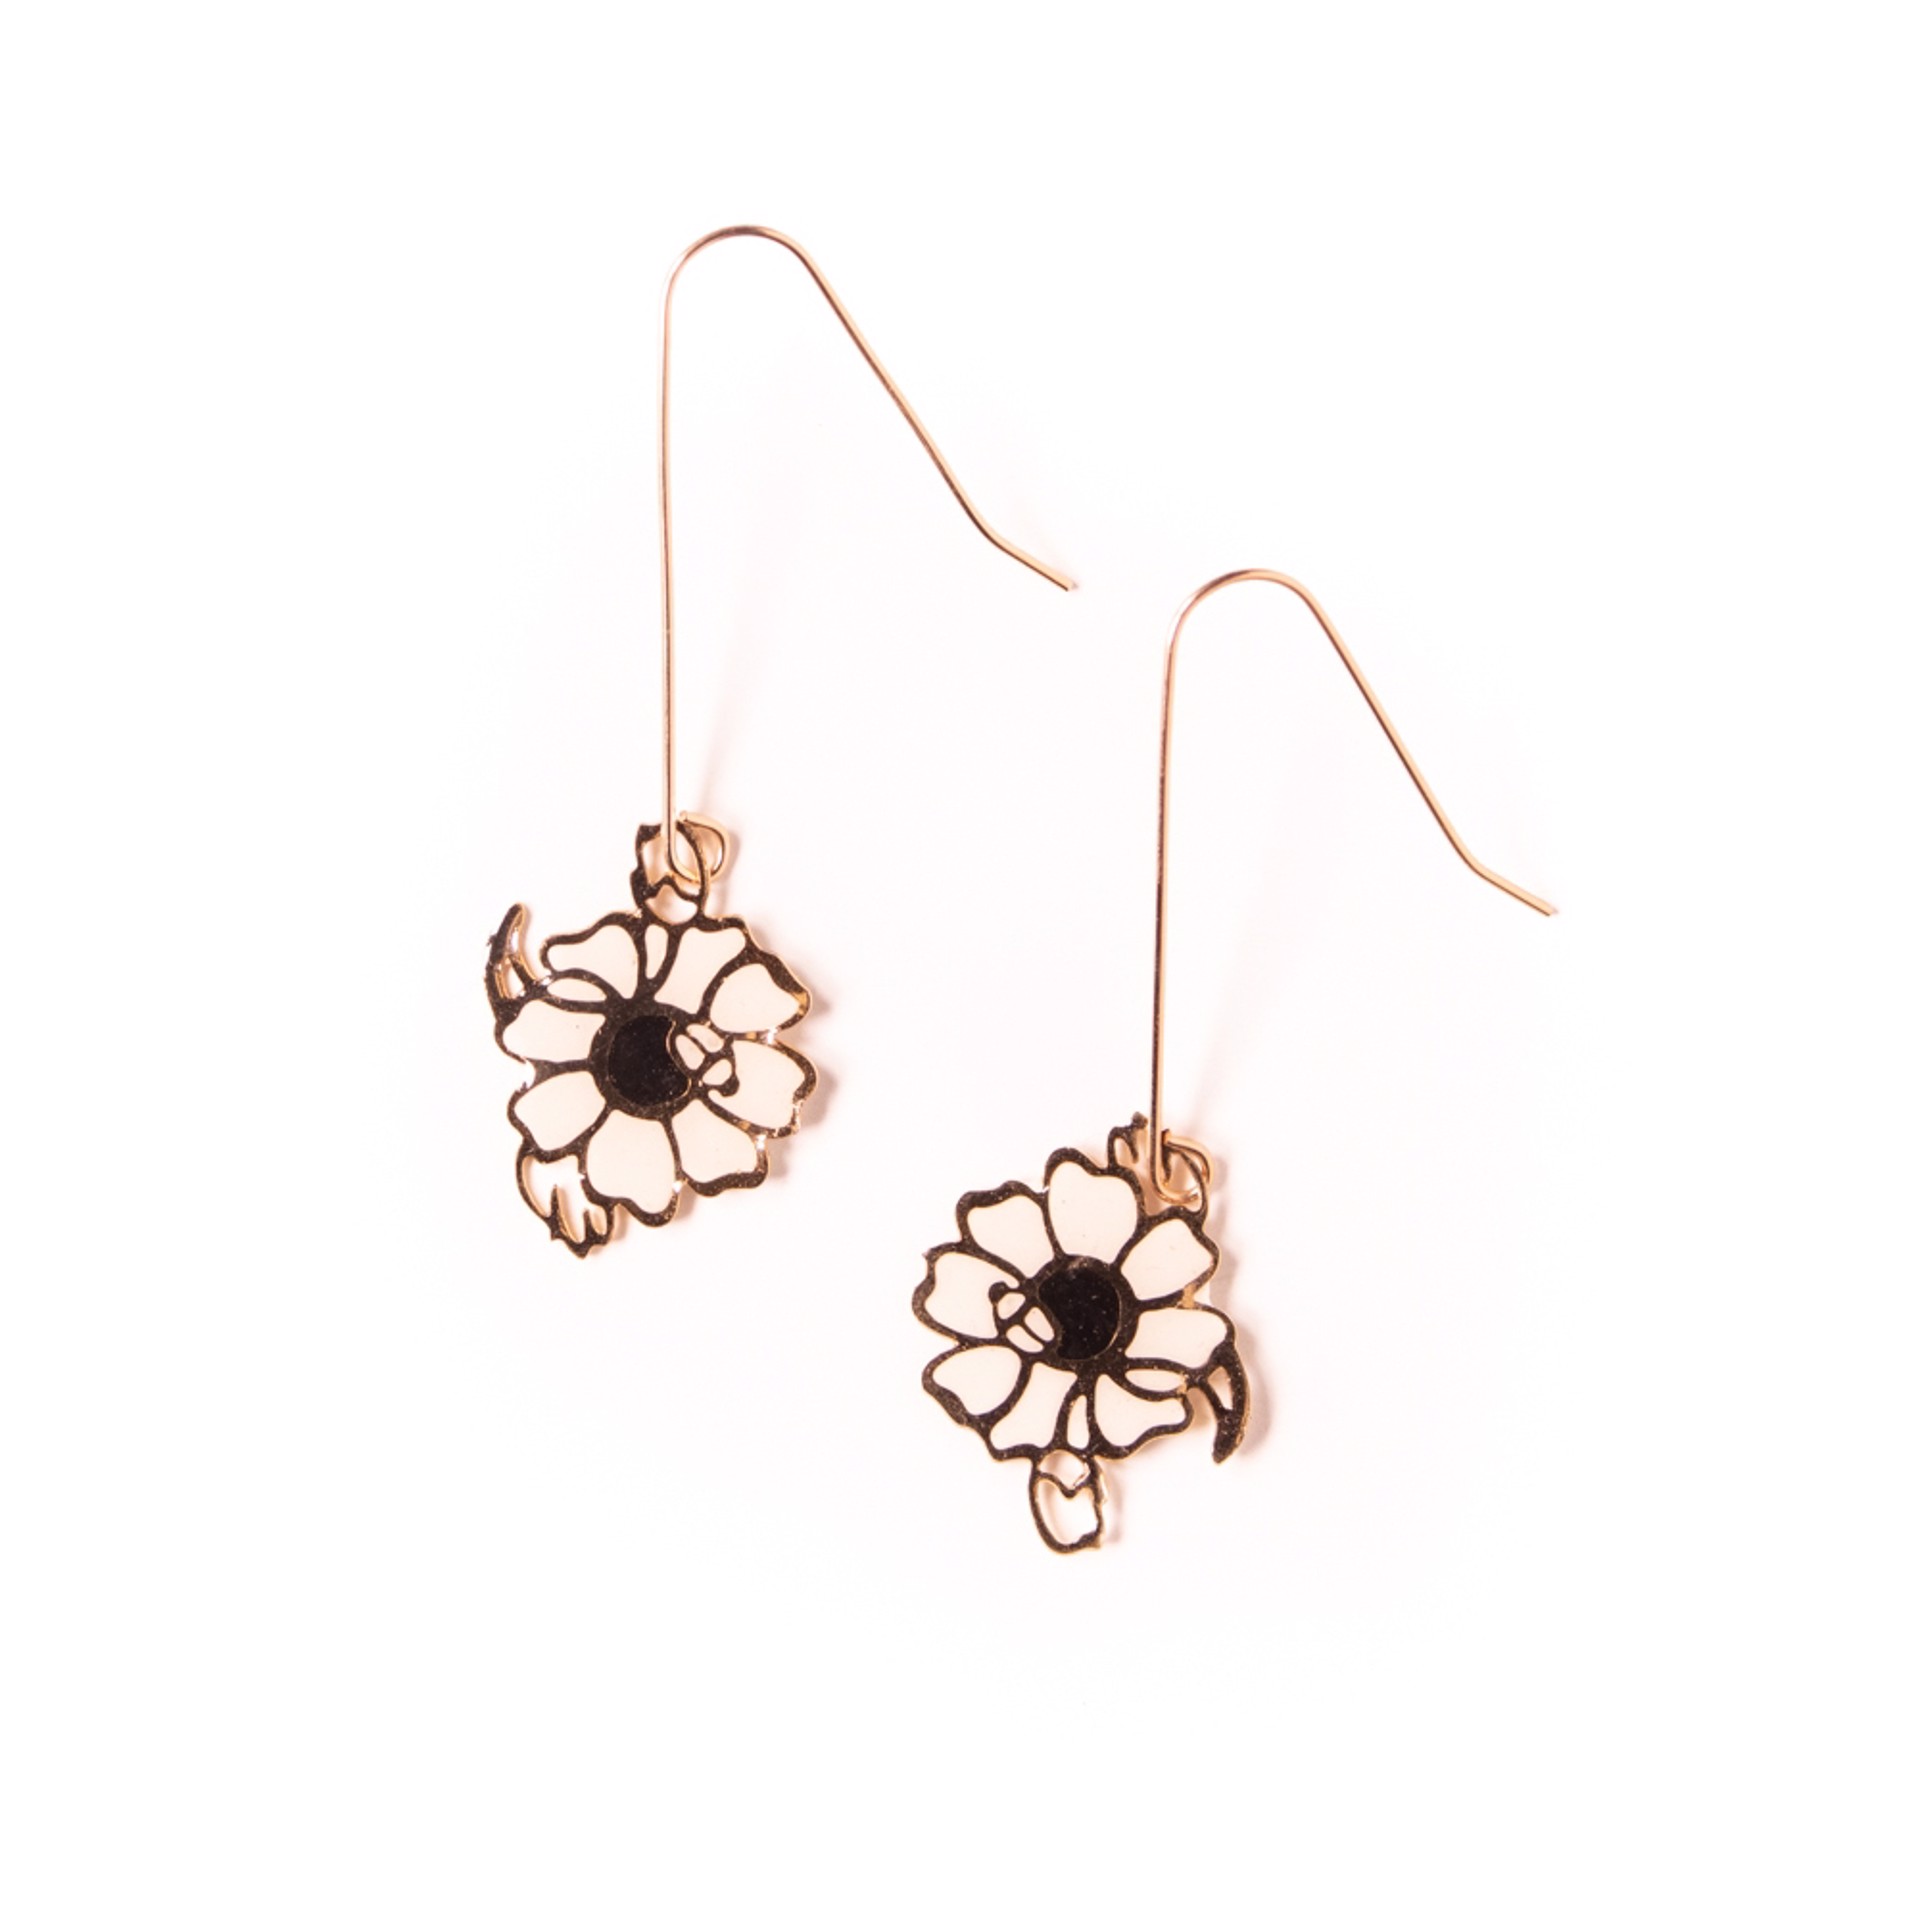 Anemone Earrings by Michelle Starbuck